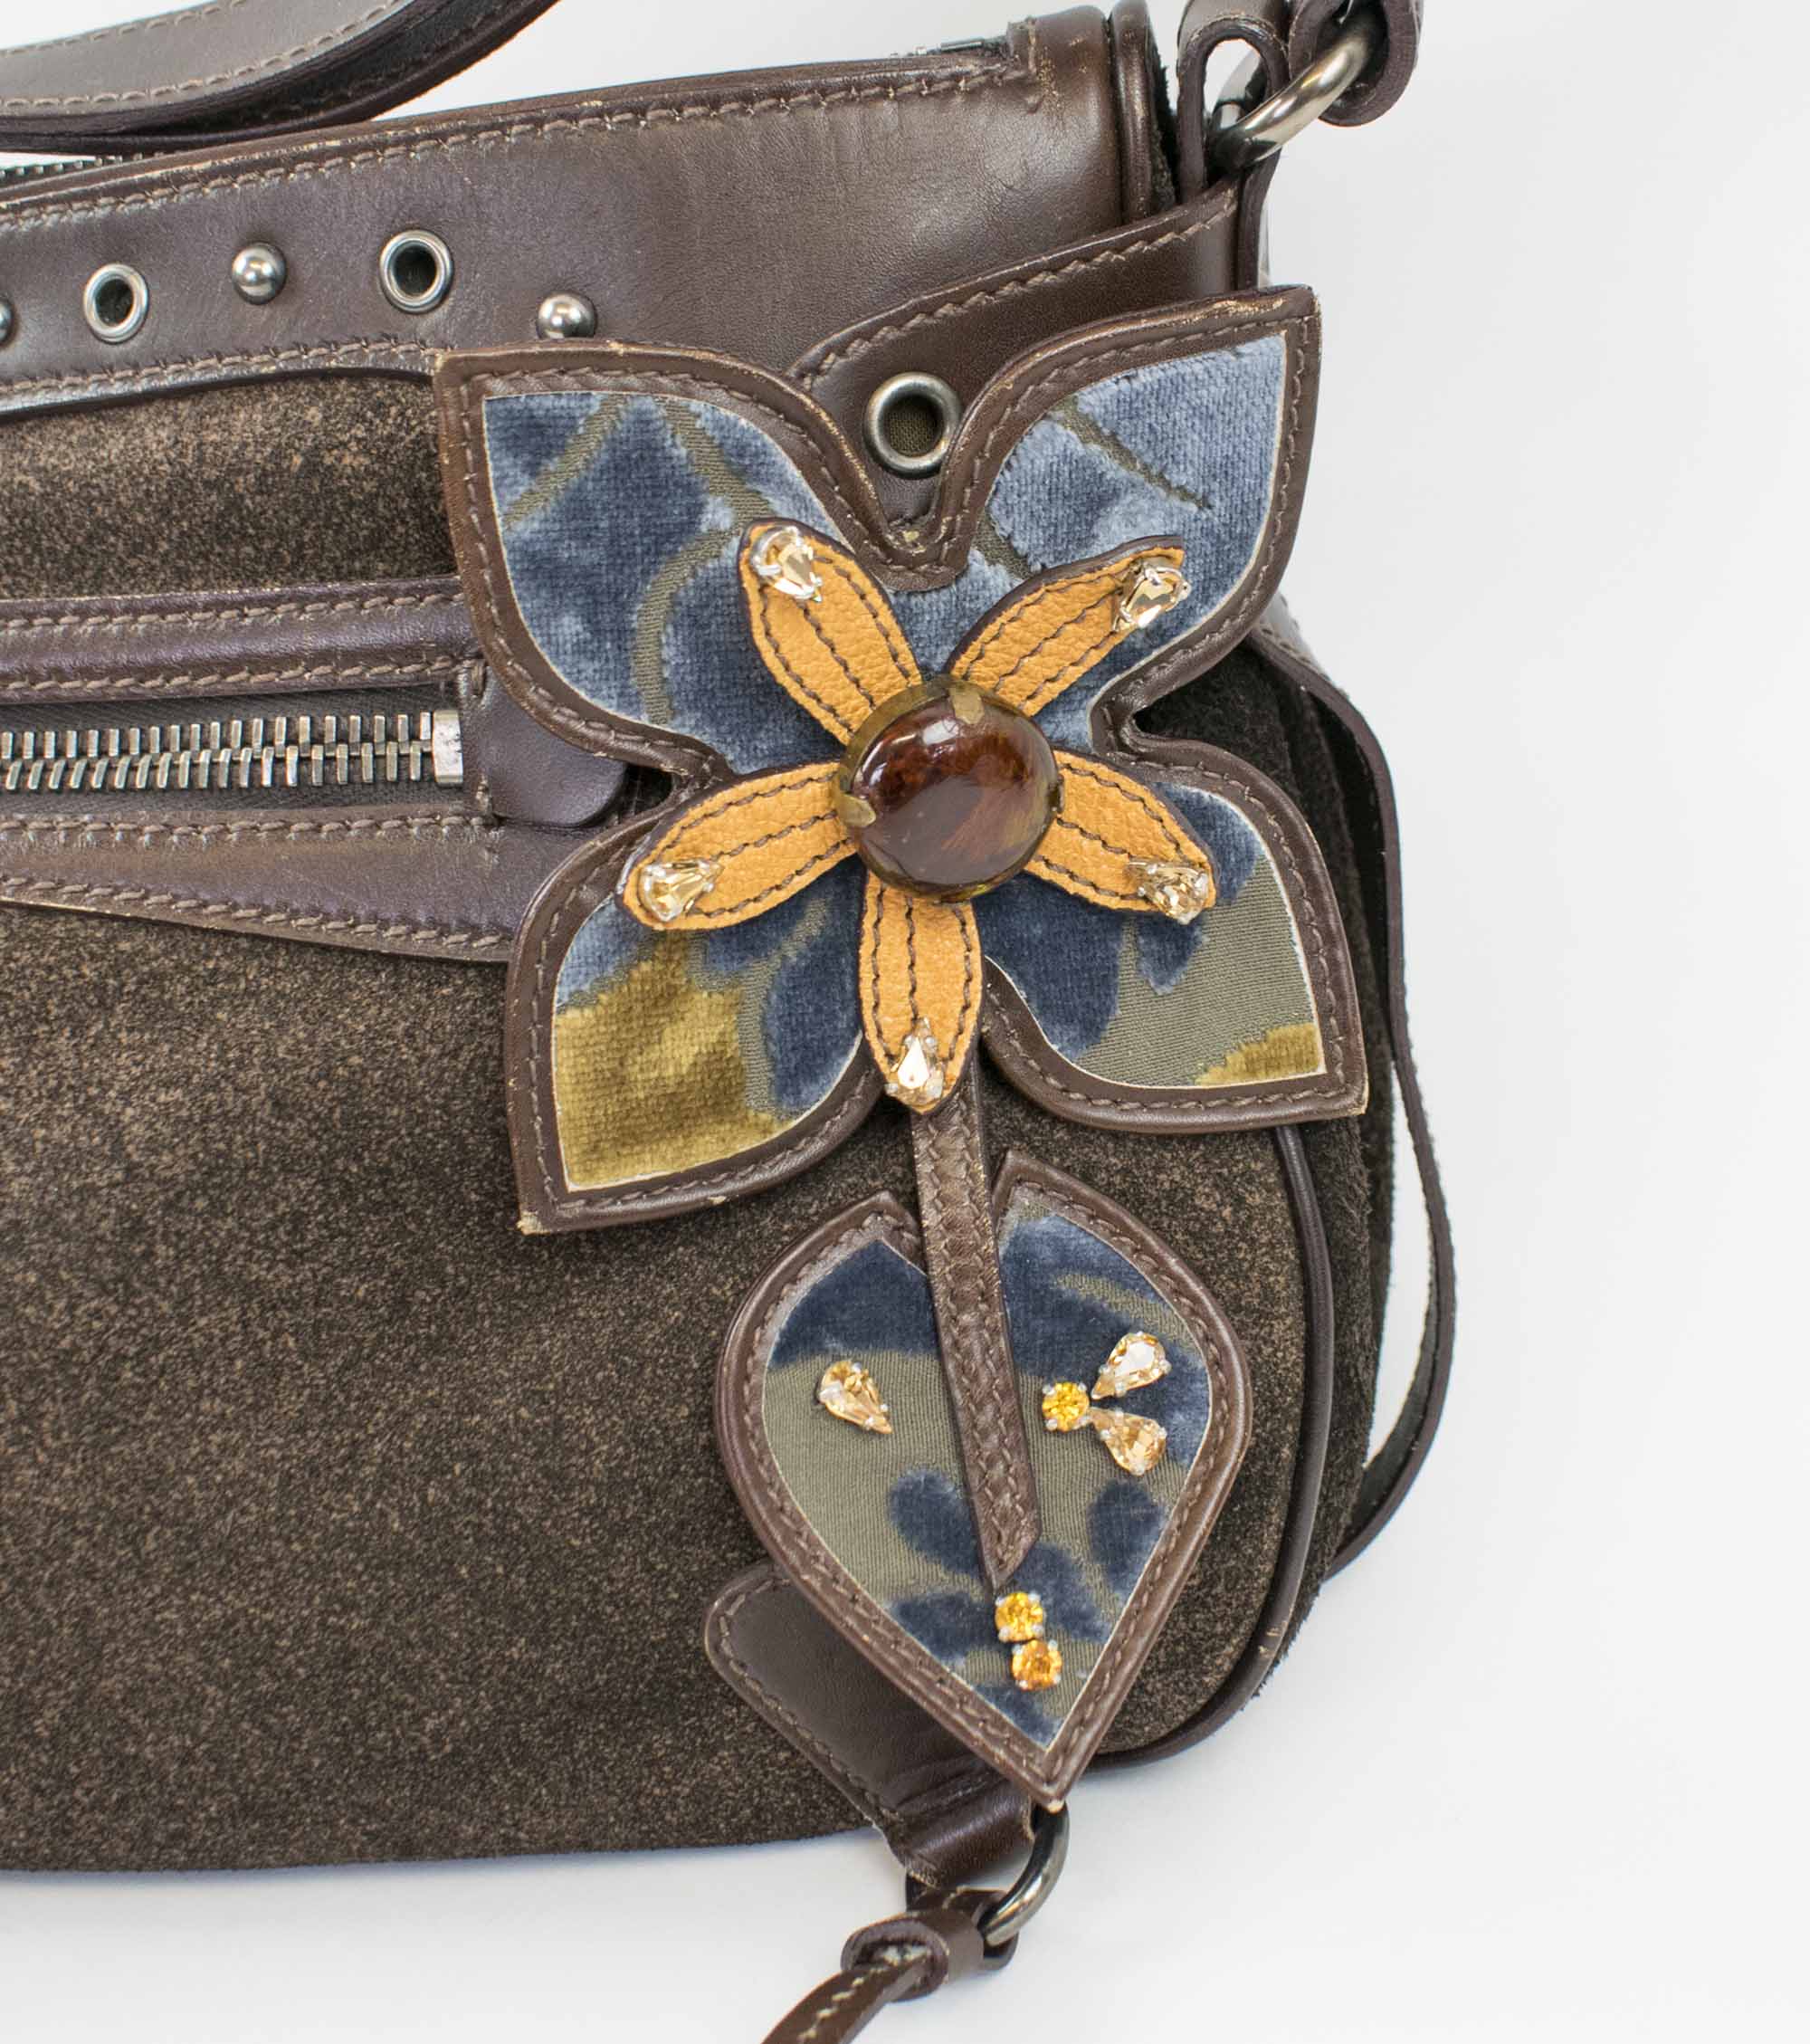 Sold at Auction: Vintage Miu Miu Shoulder Bag, Brown Leather with